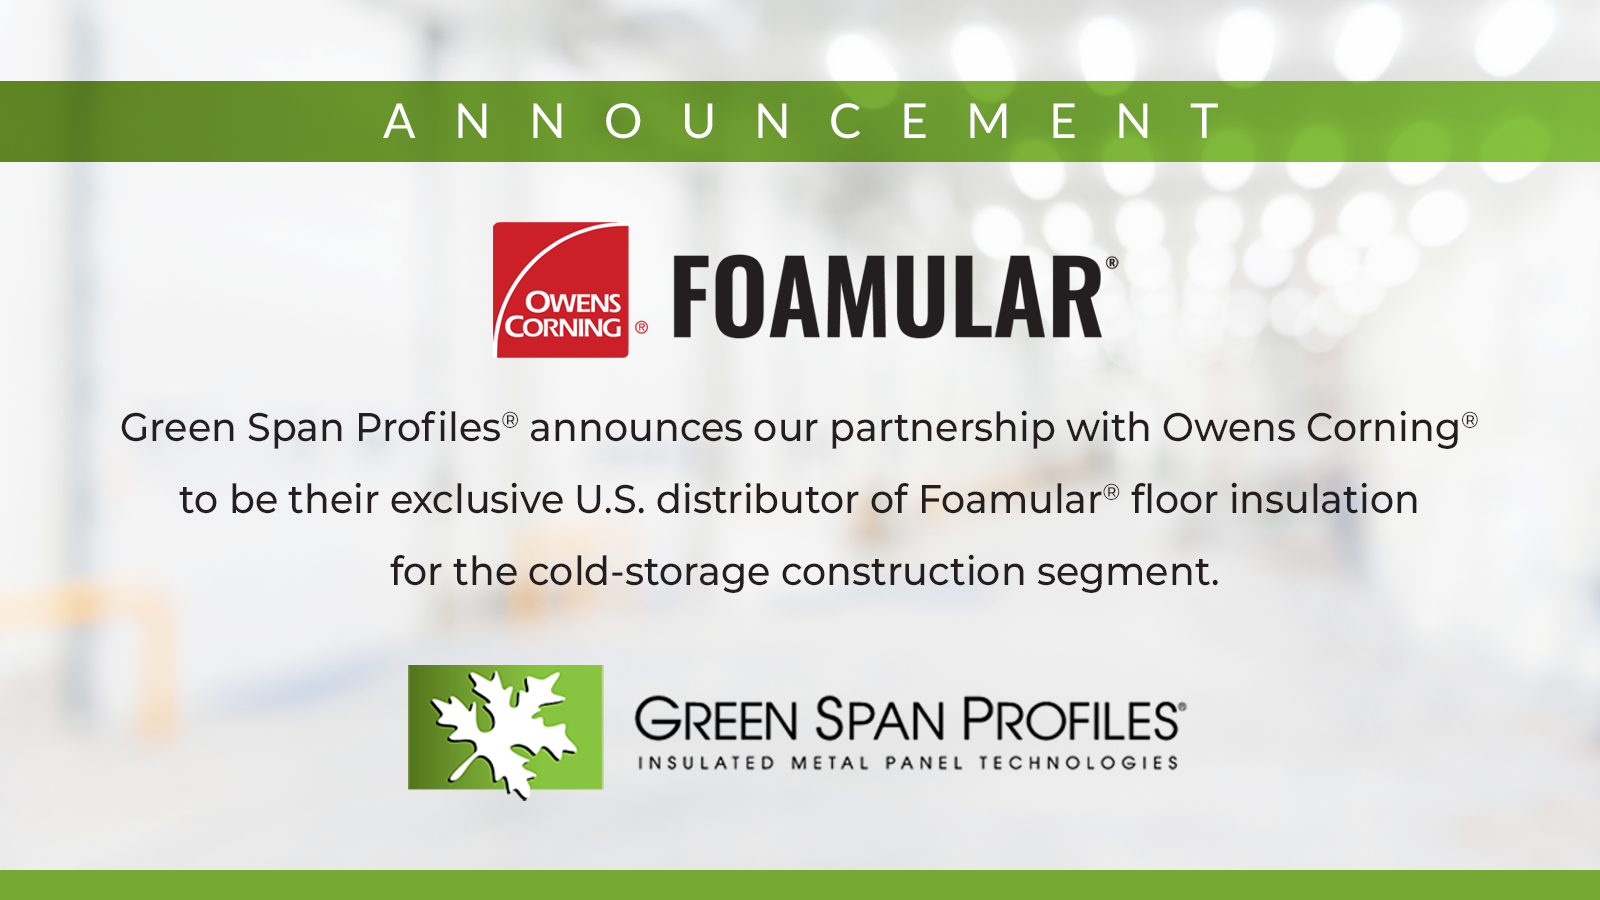 Foamular and Green Span Profiles